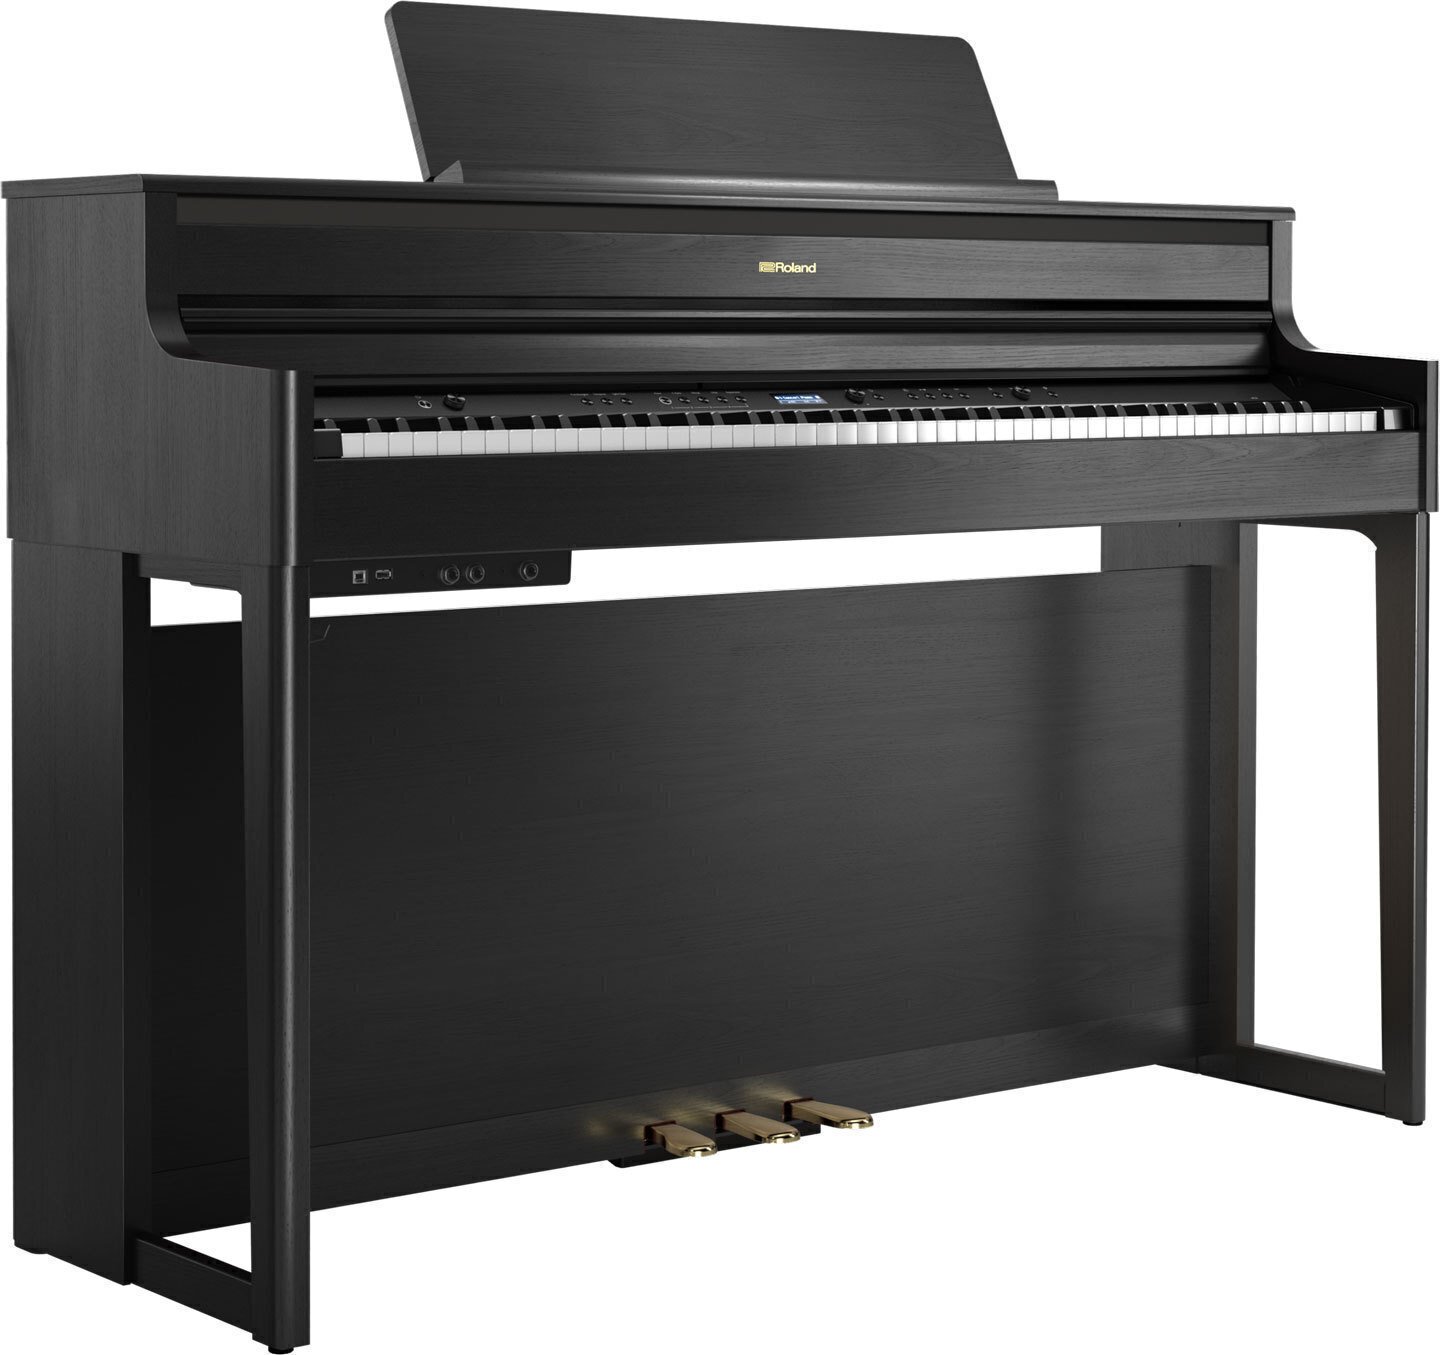 Piano Digitale Roland HP 704 Charcoal Black Piano Digitale